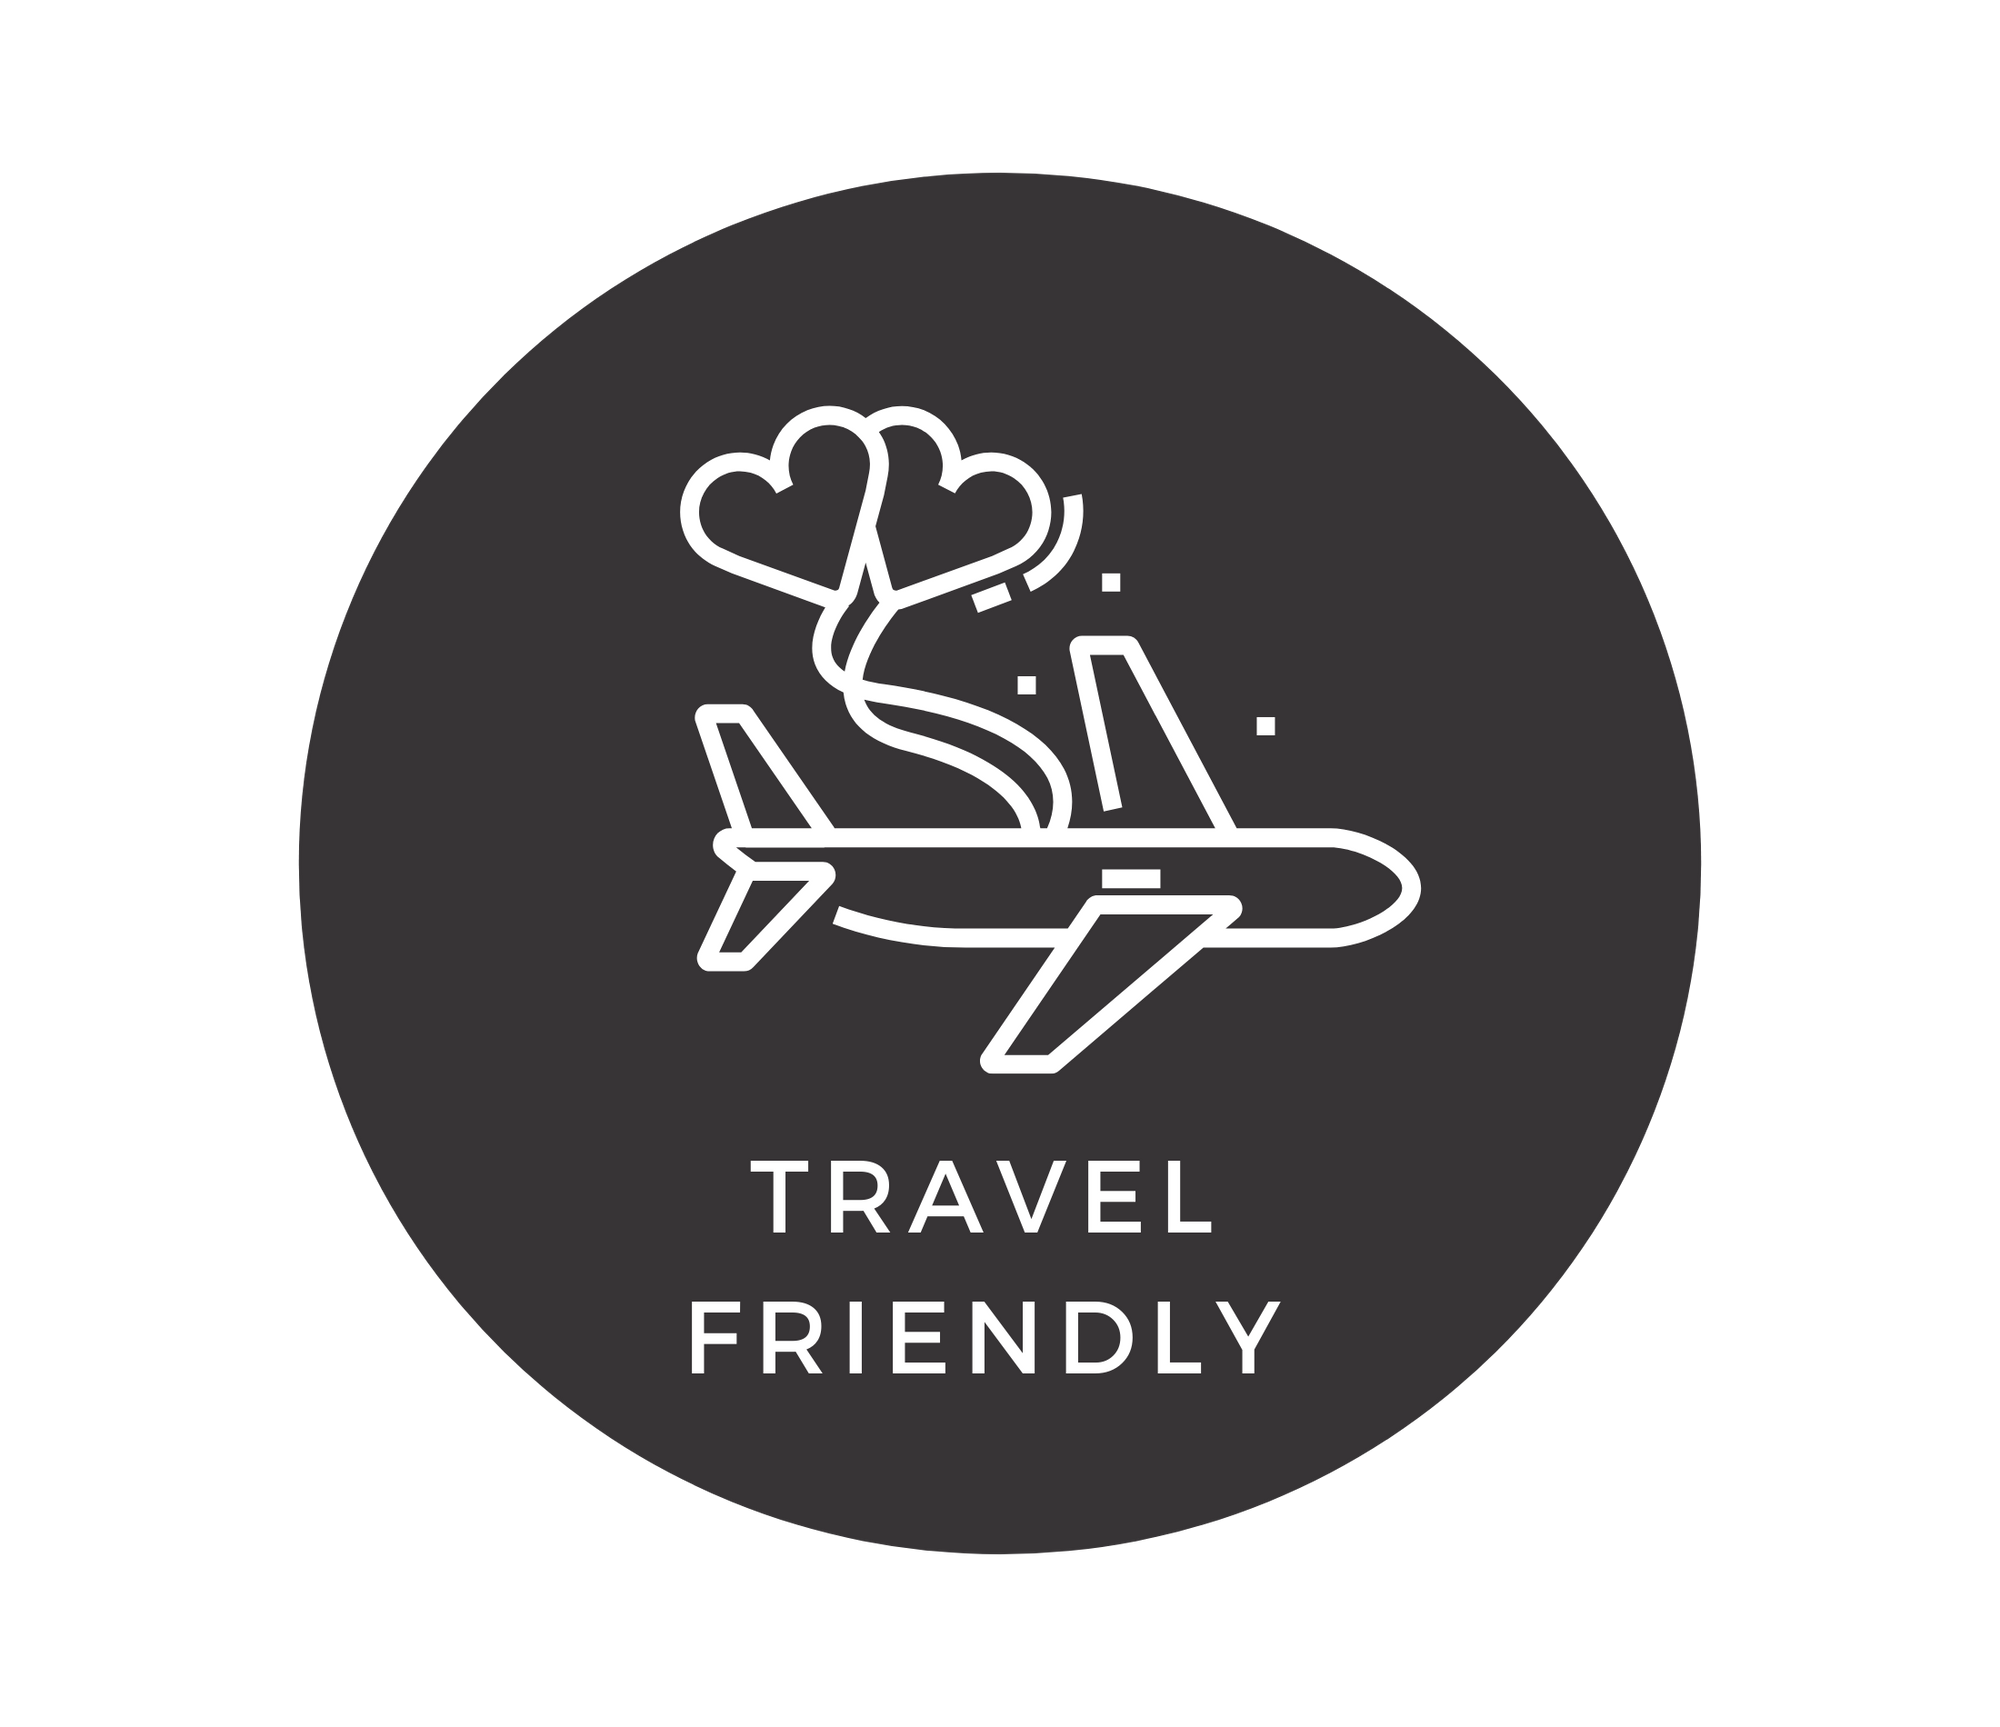 Travel friendly icon